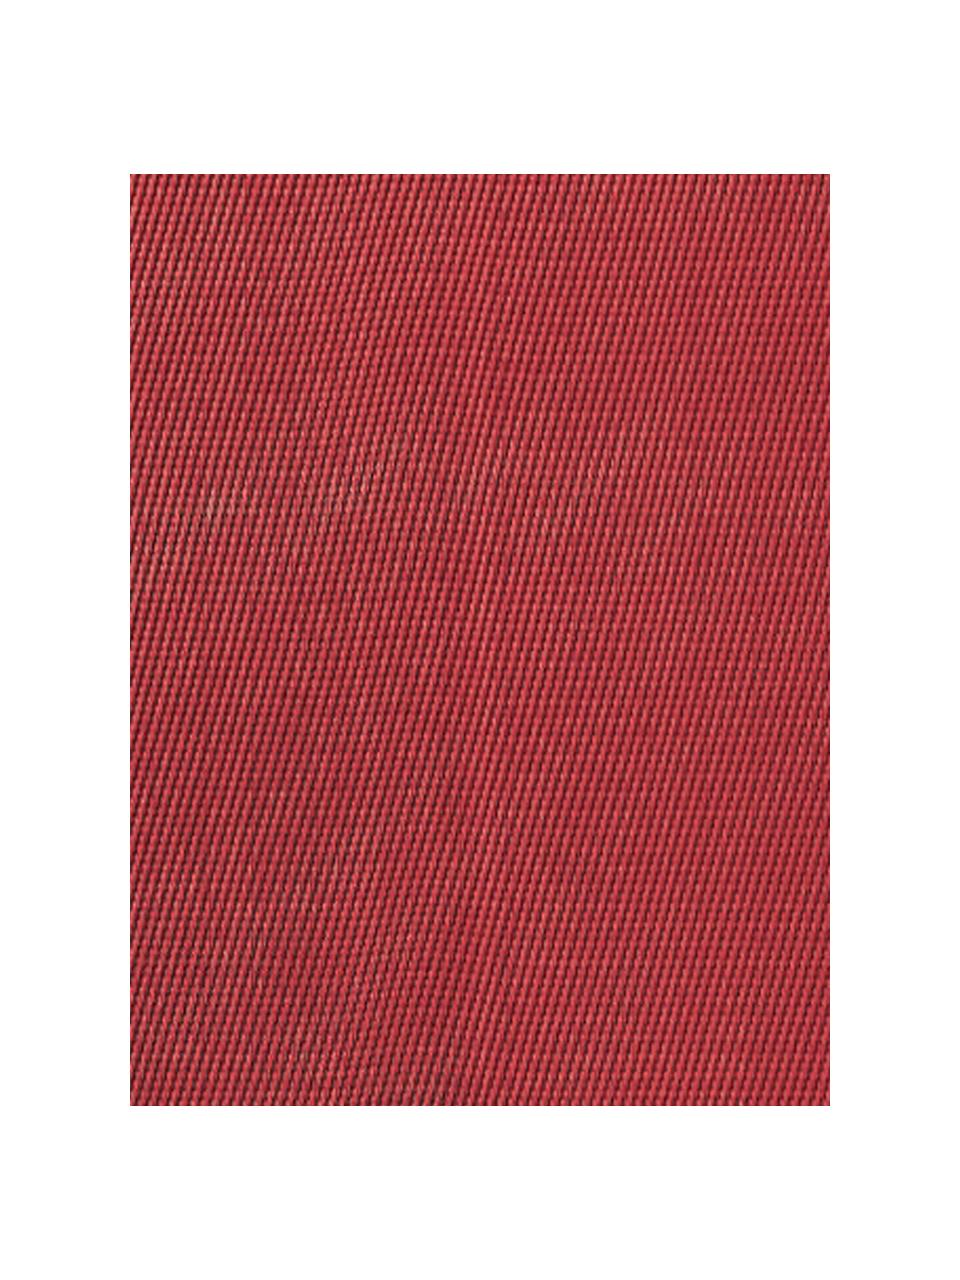 Kunststoff-Tischsets Trefl, 2 Stück, Kunststoff (PVC), Rot, B 33 x L 46 cm